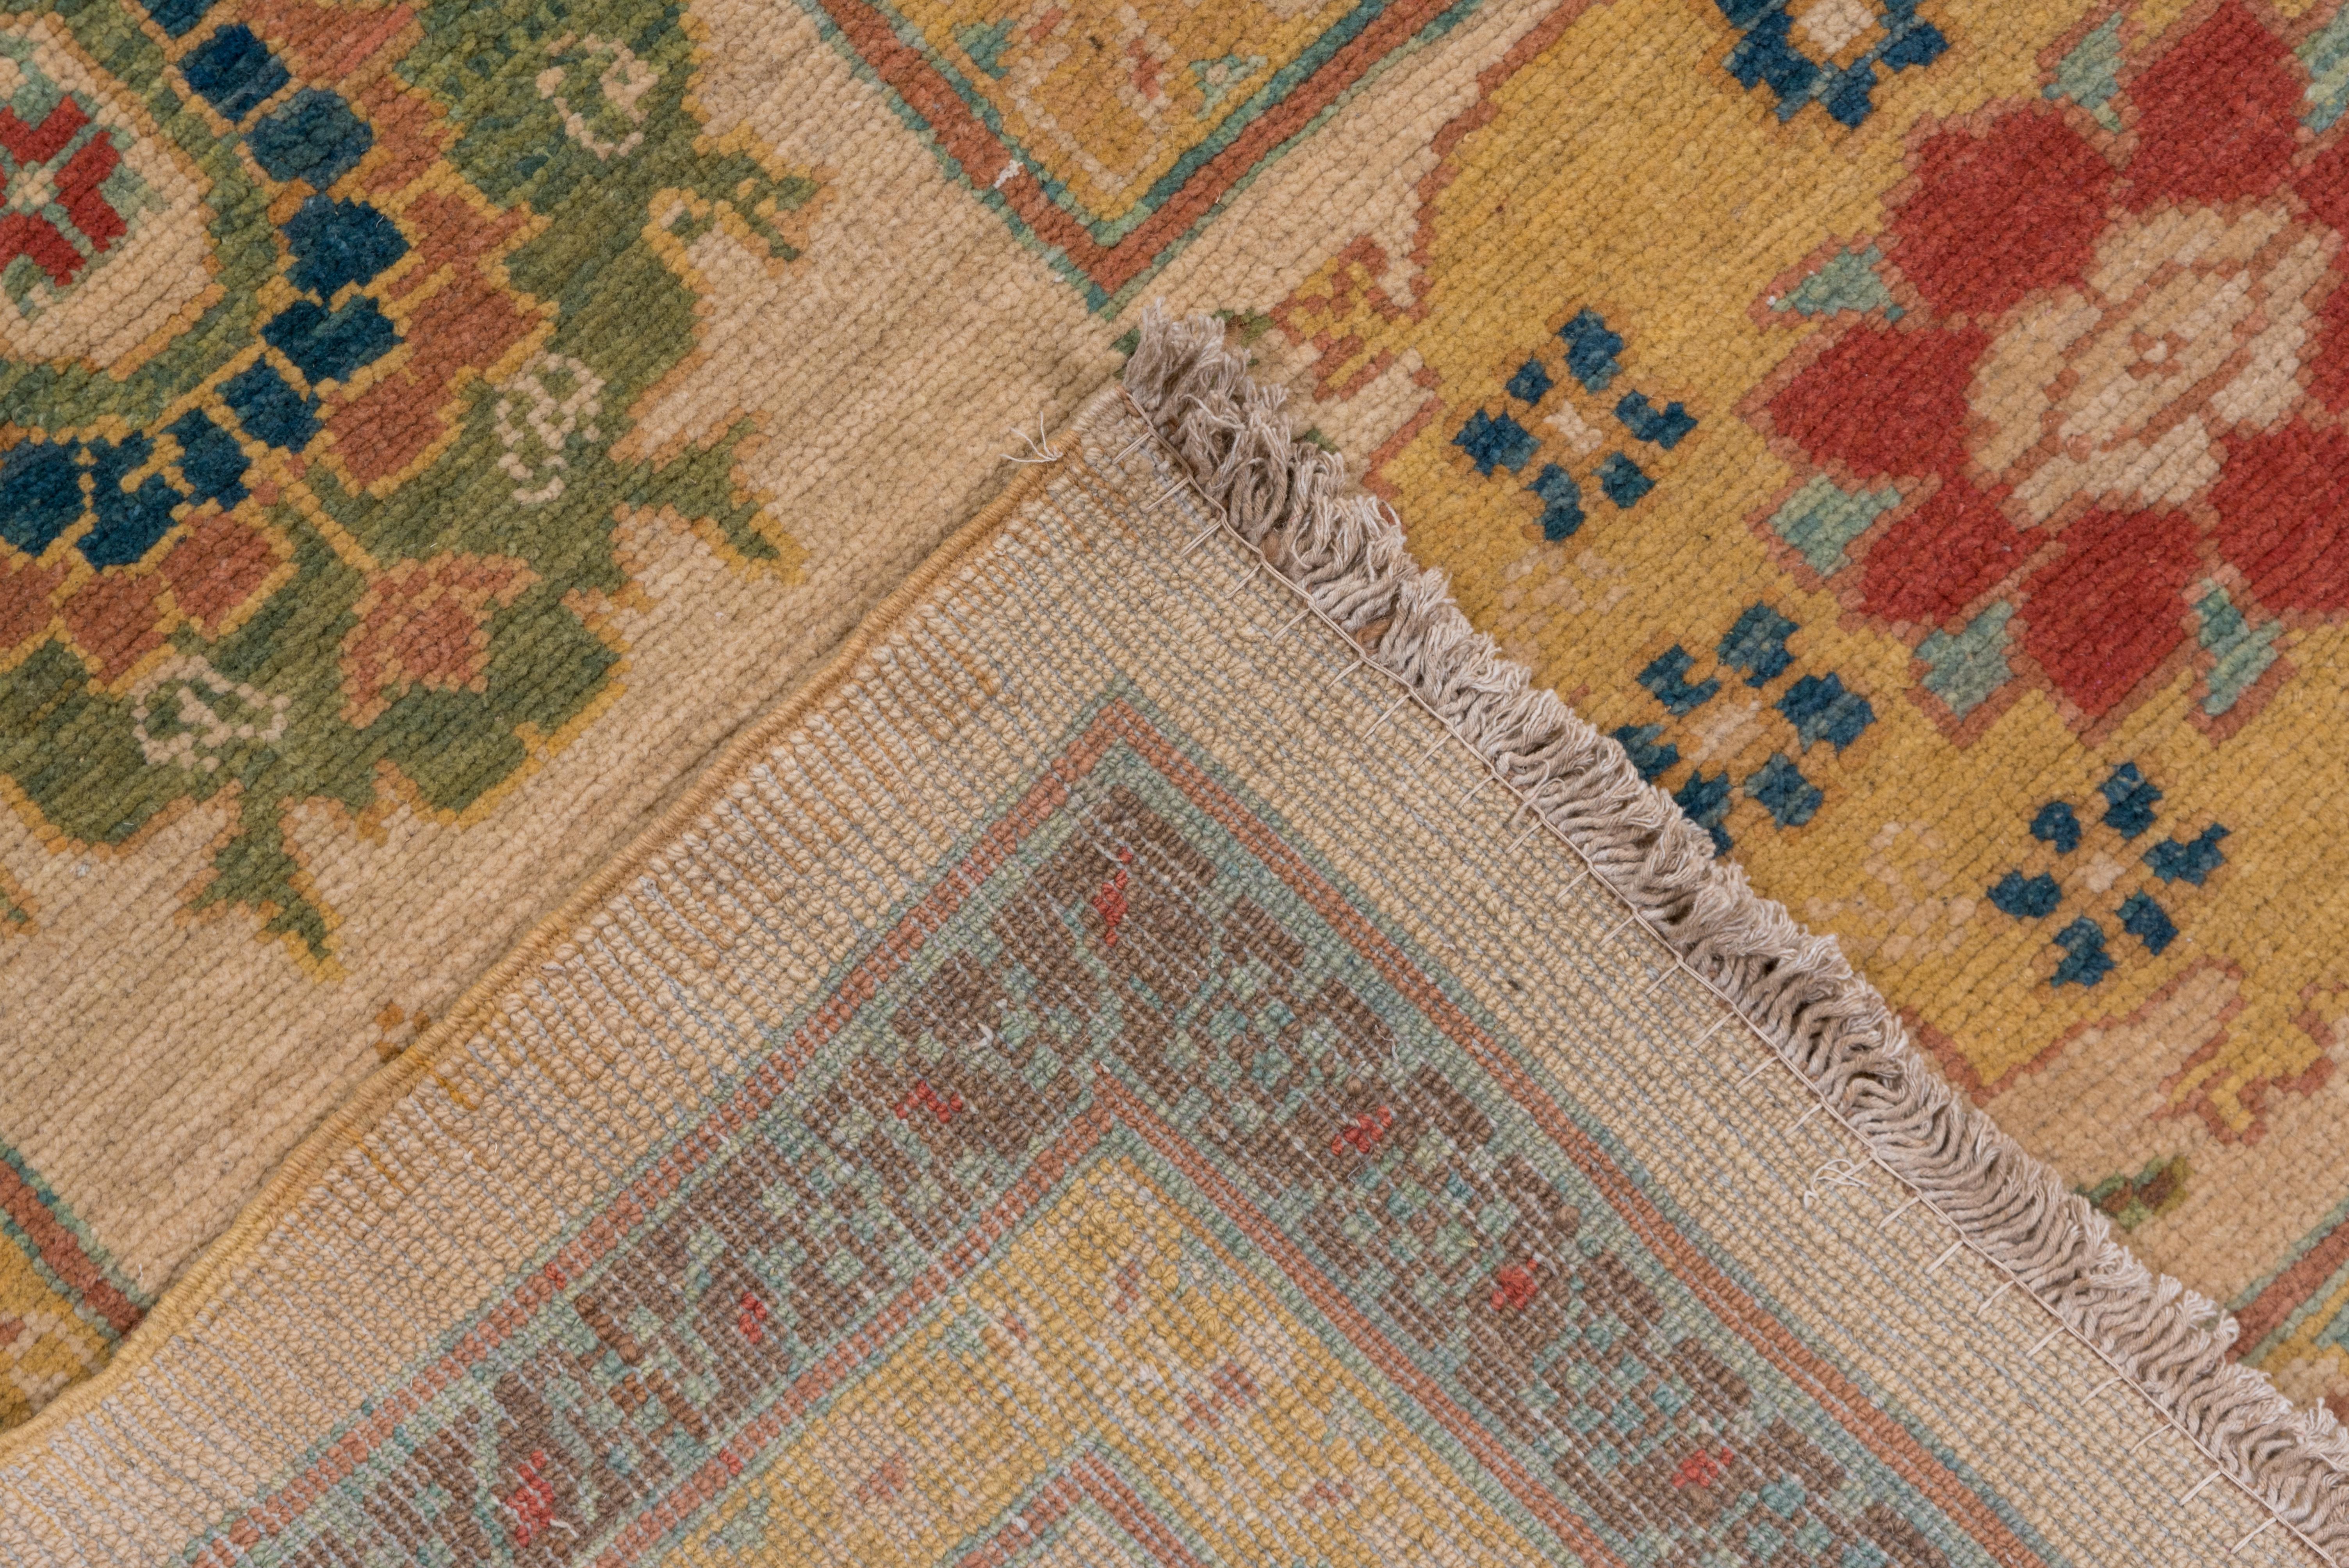 Contemporary Sultanabad Carpet, Handmade Wool Carpet